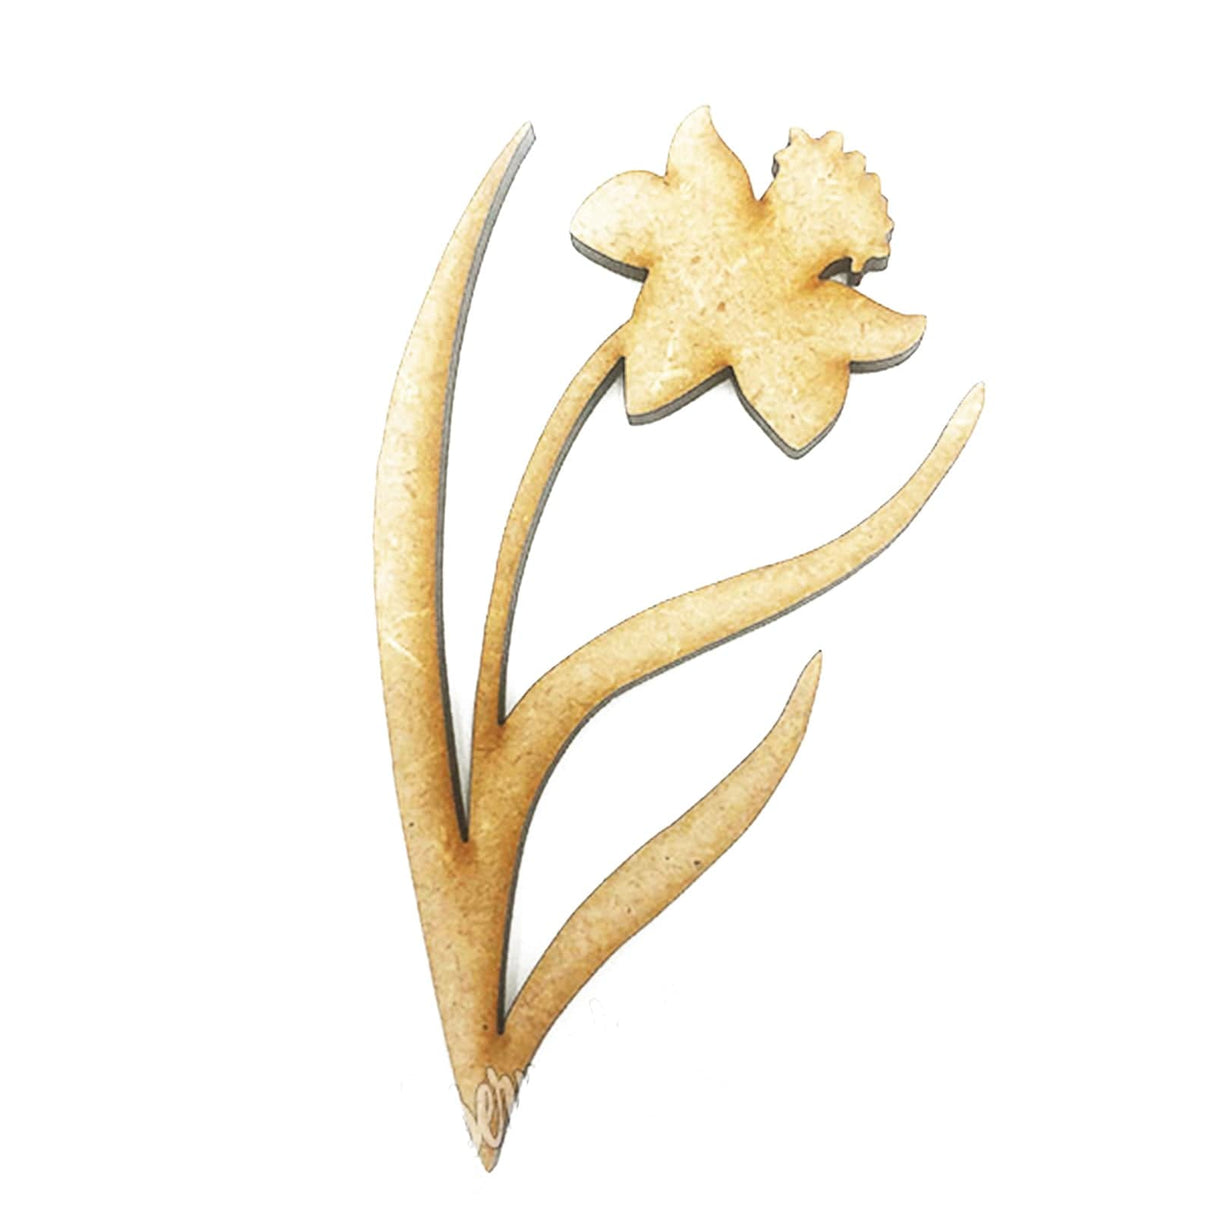 Welsh Daffodil MDF Craft Shapes - Flower of Wales - Laserworksuk